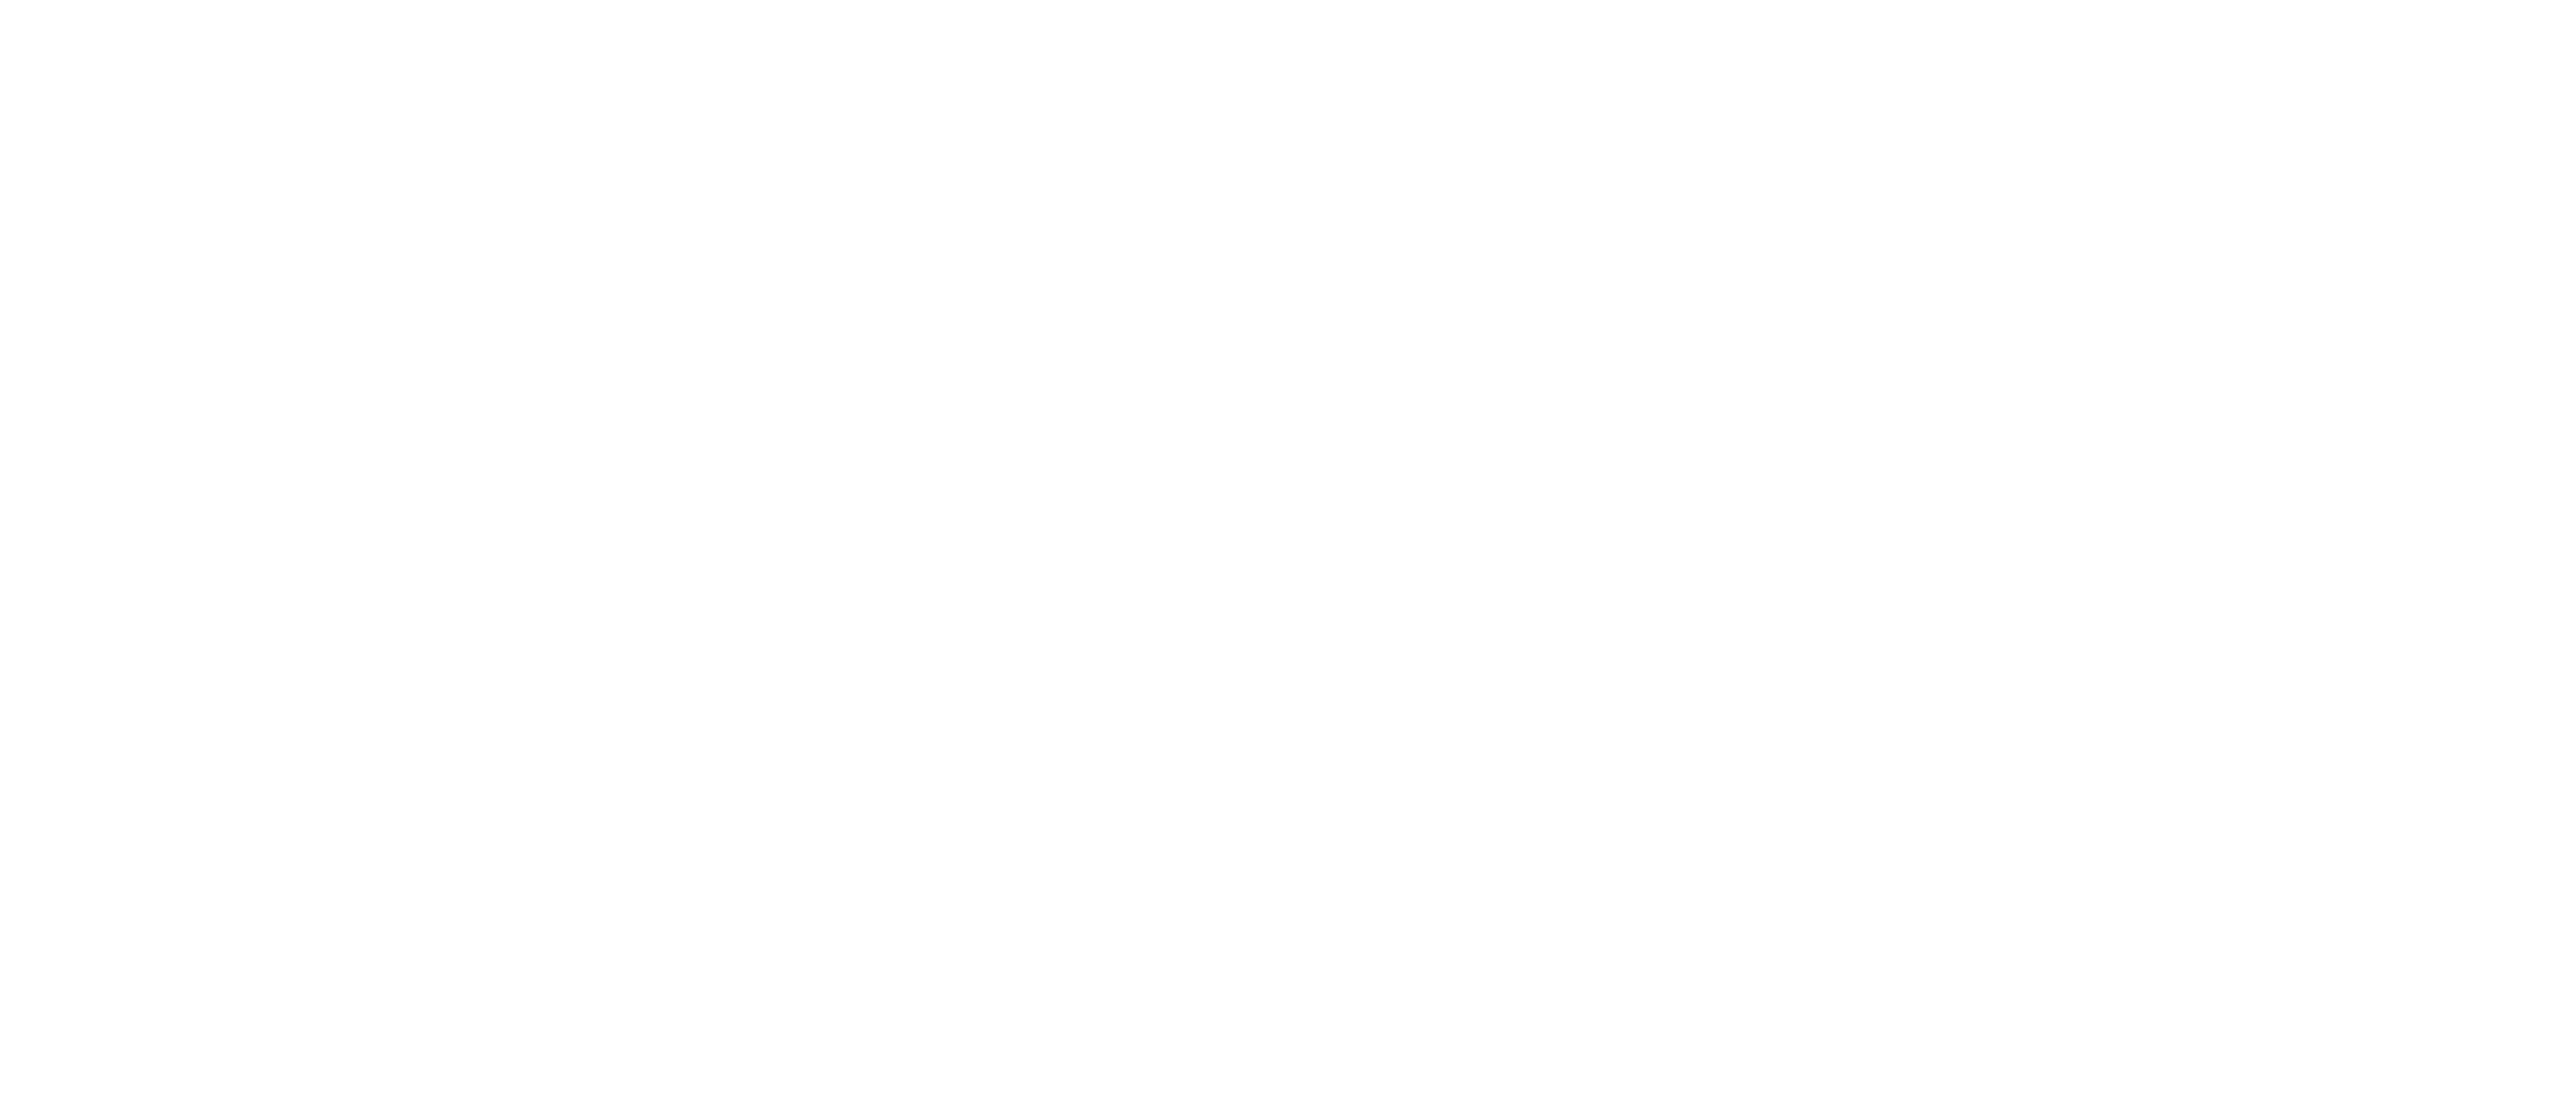 Angie Tribeca logo